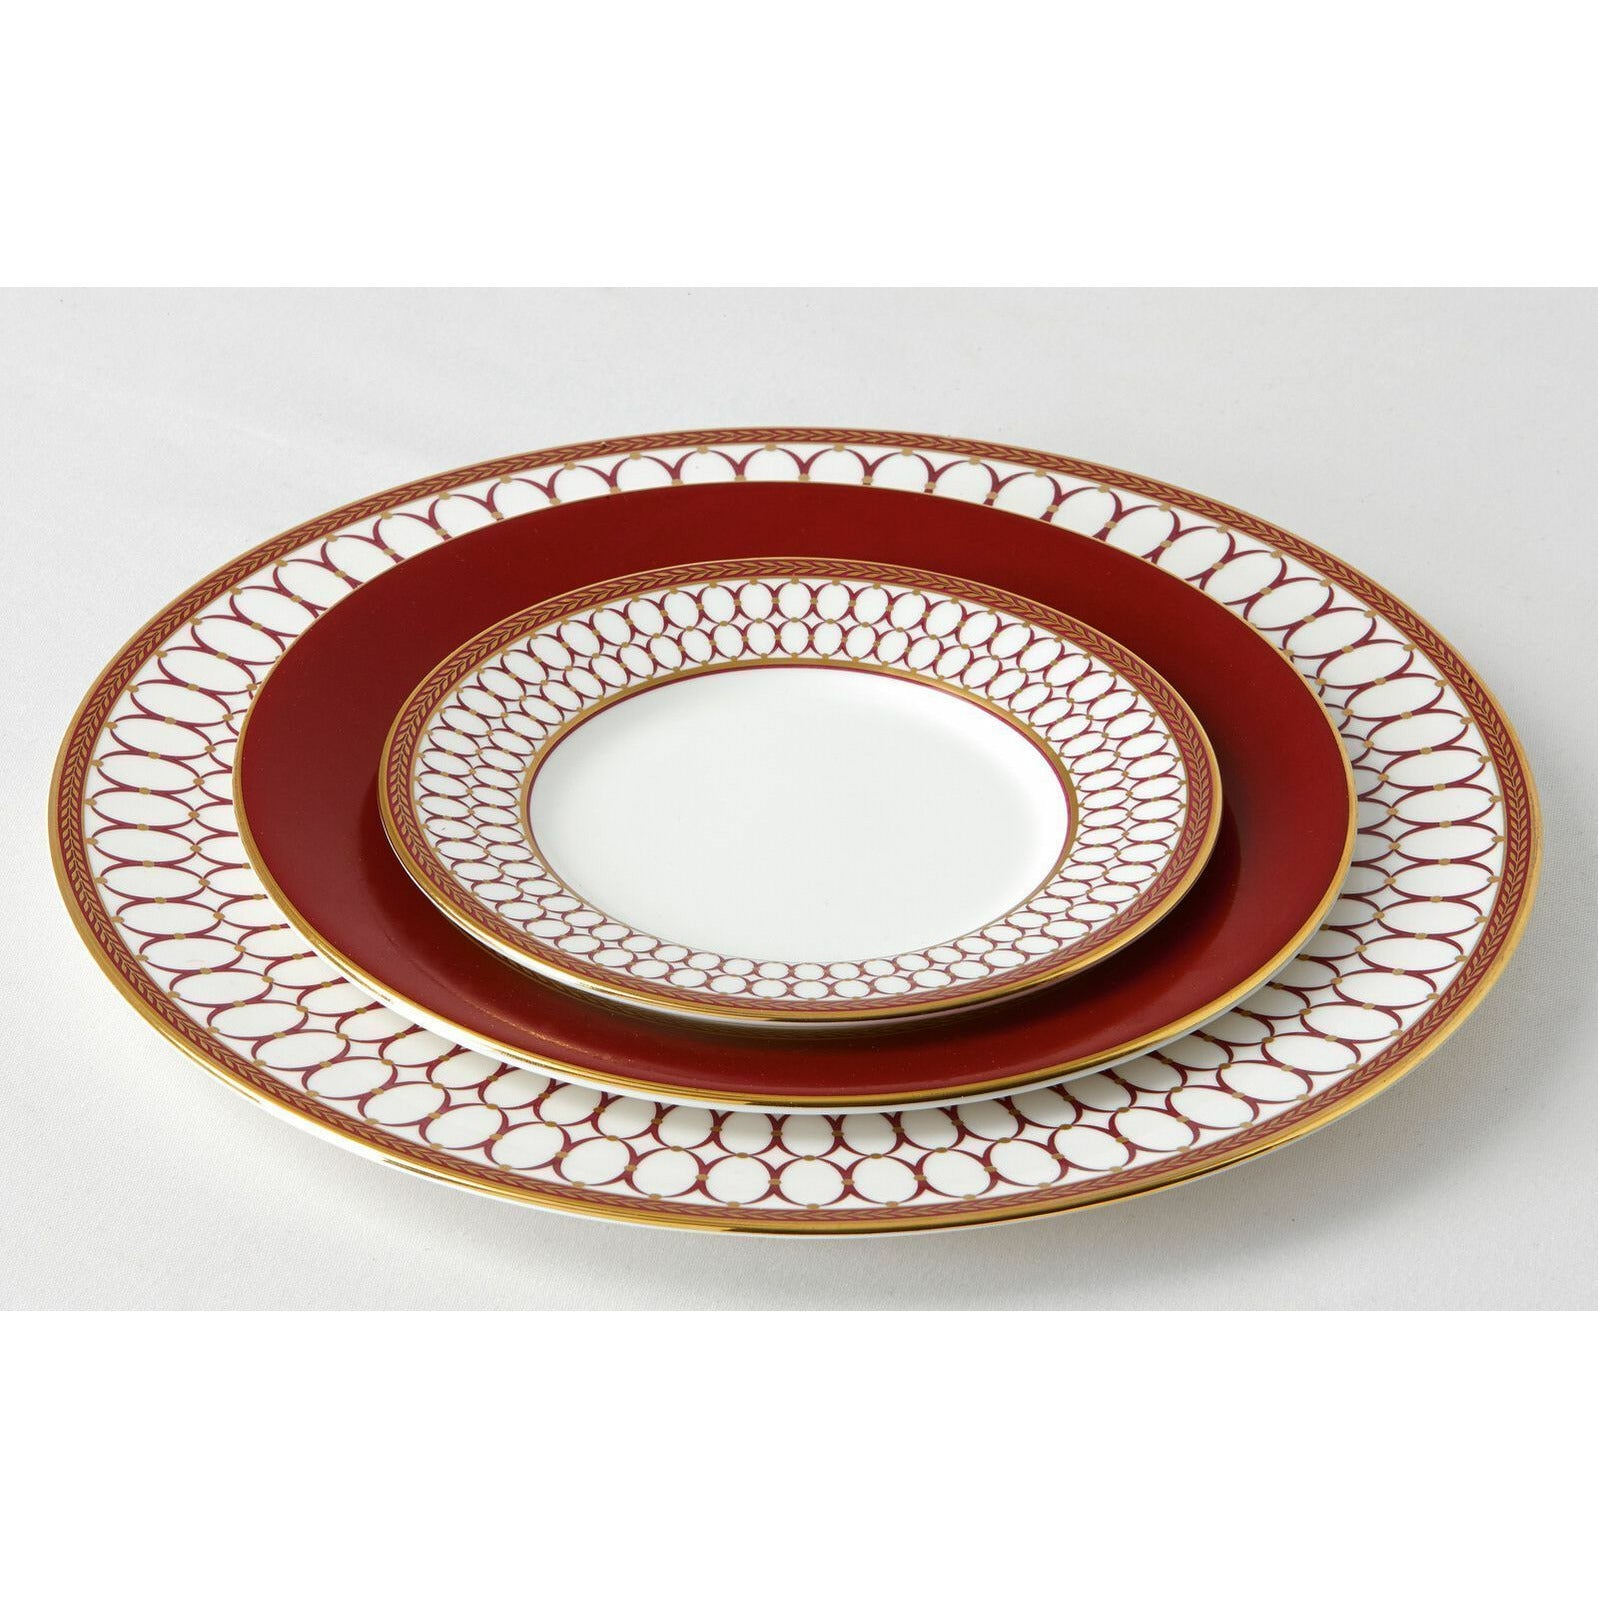 Wedgwood Renaissance Red Plate, 20 cm